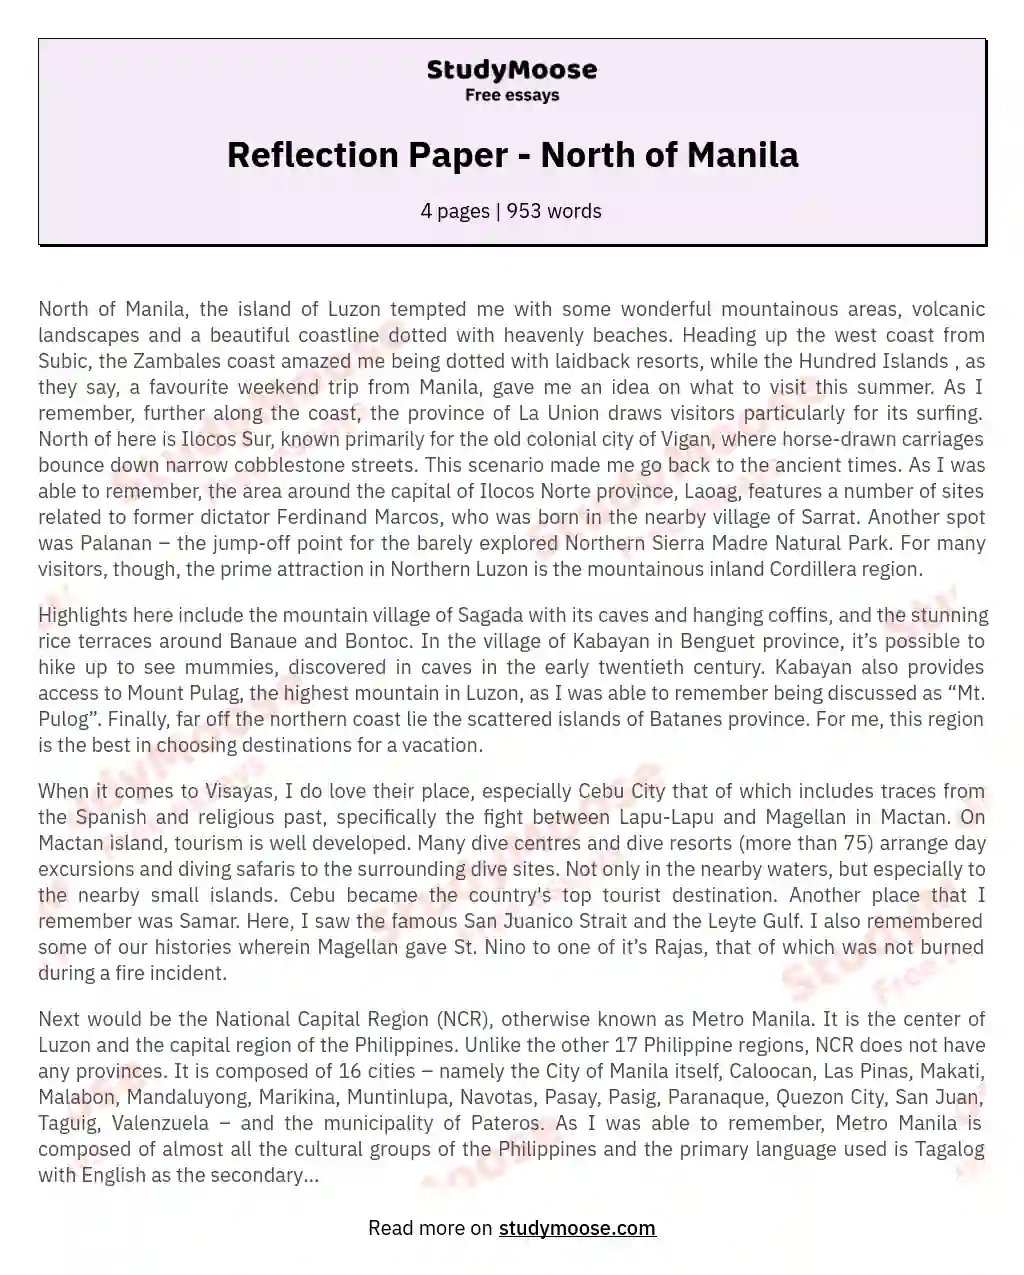 Reflection Paper - North of Manila essay